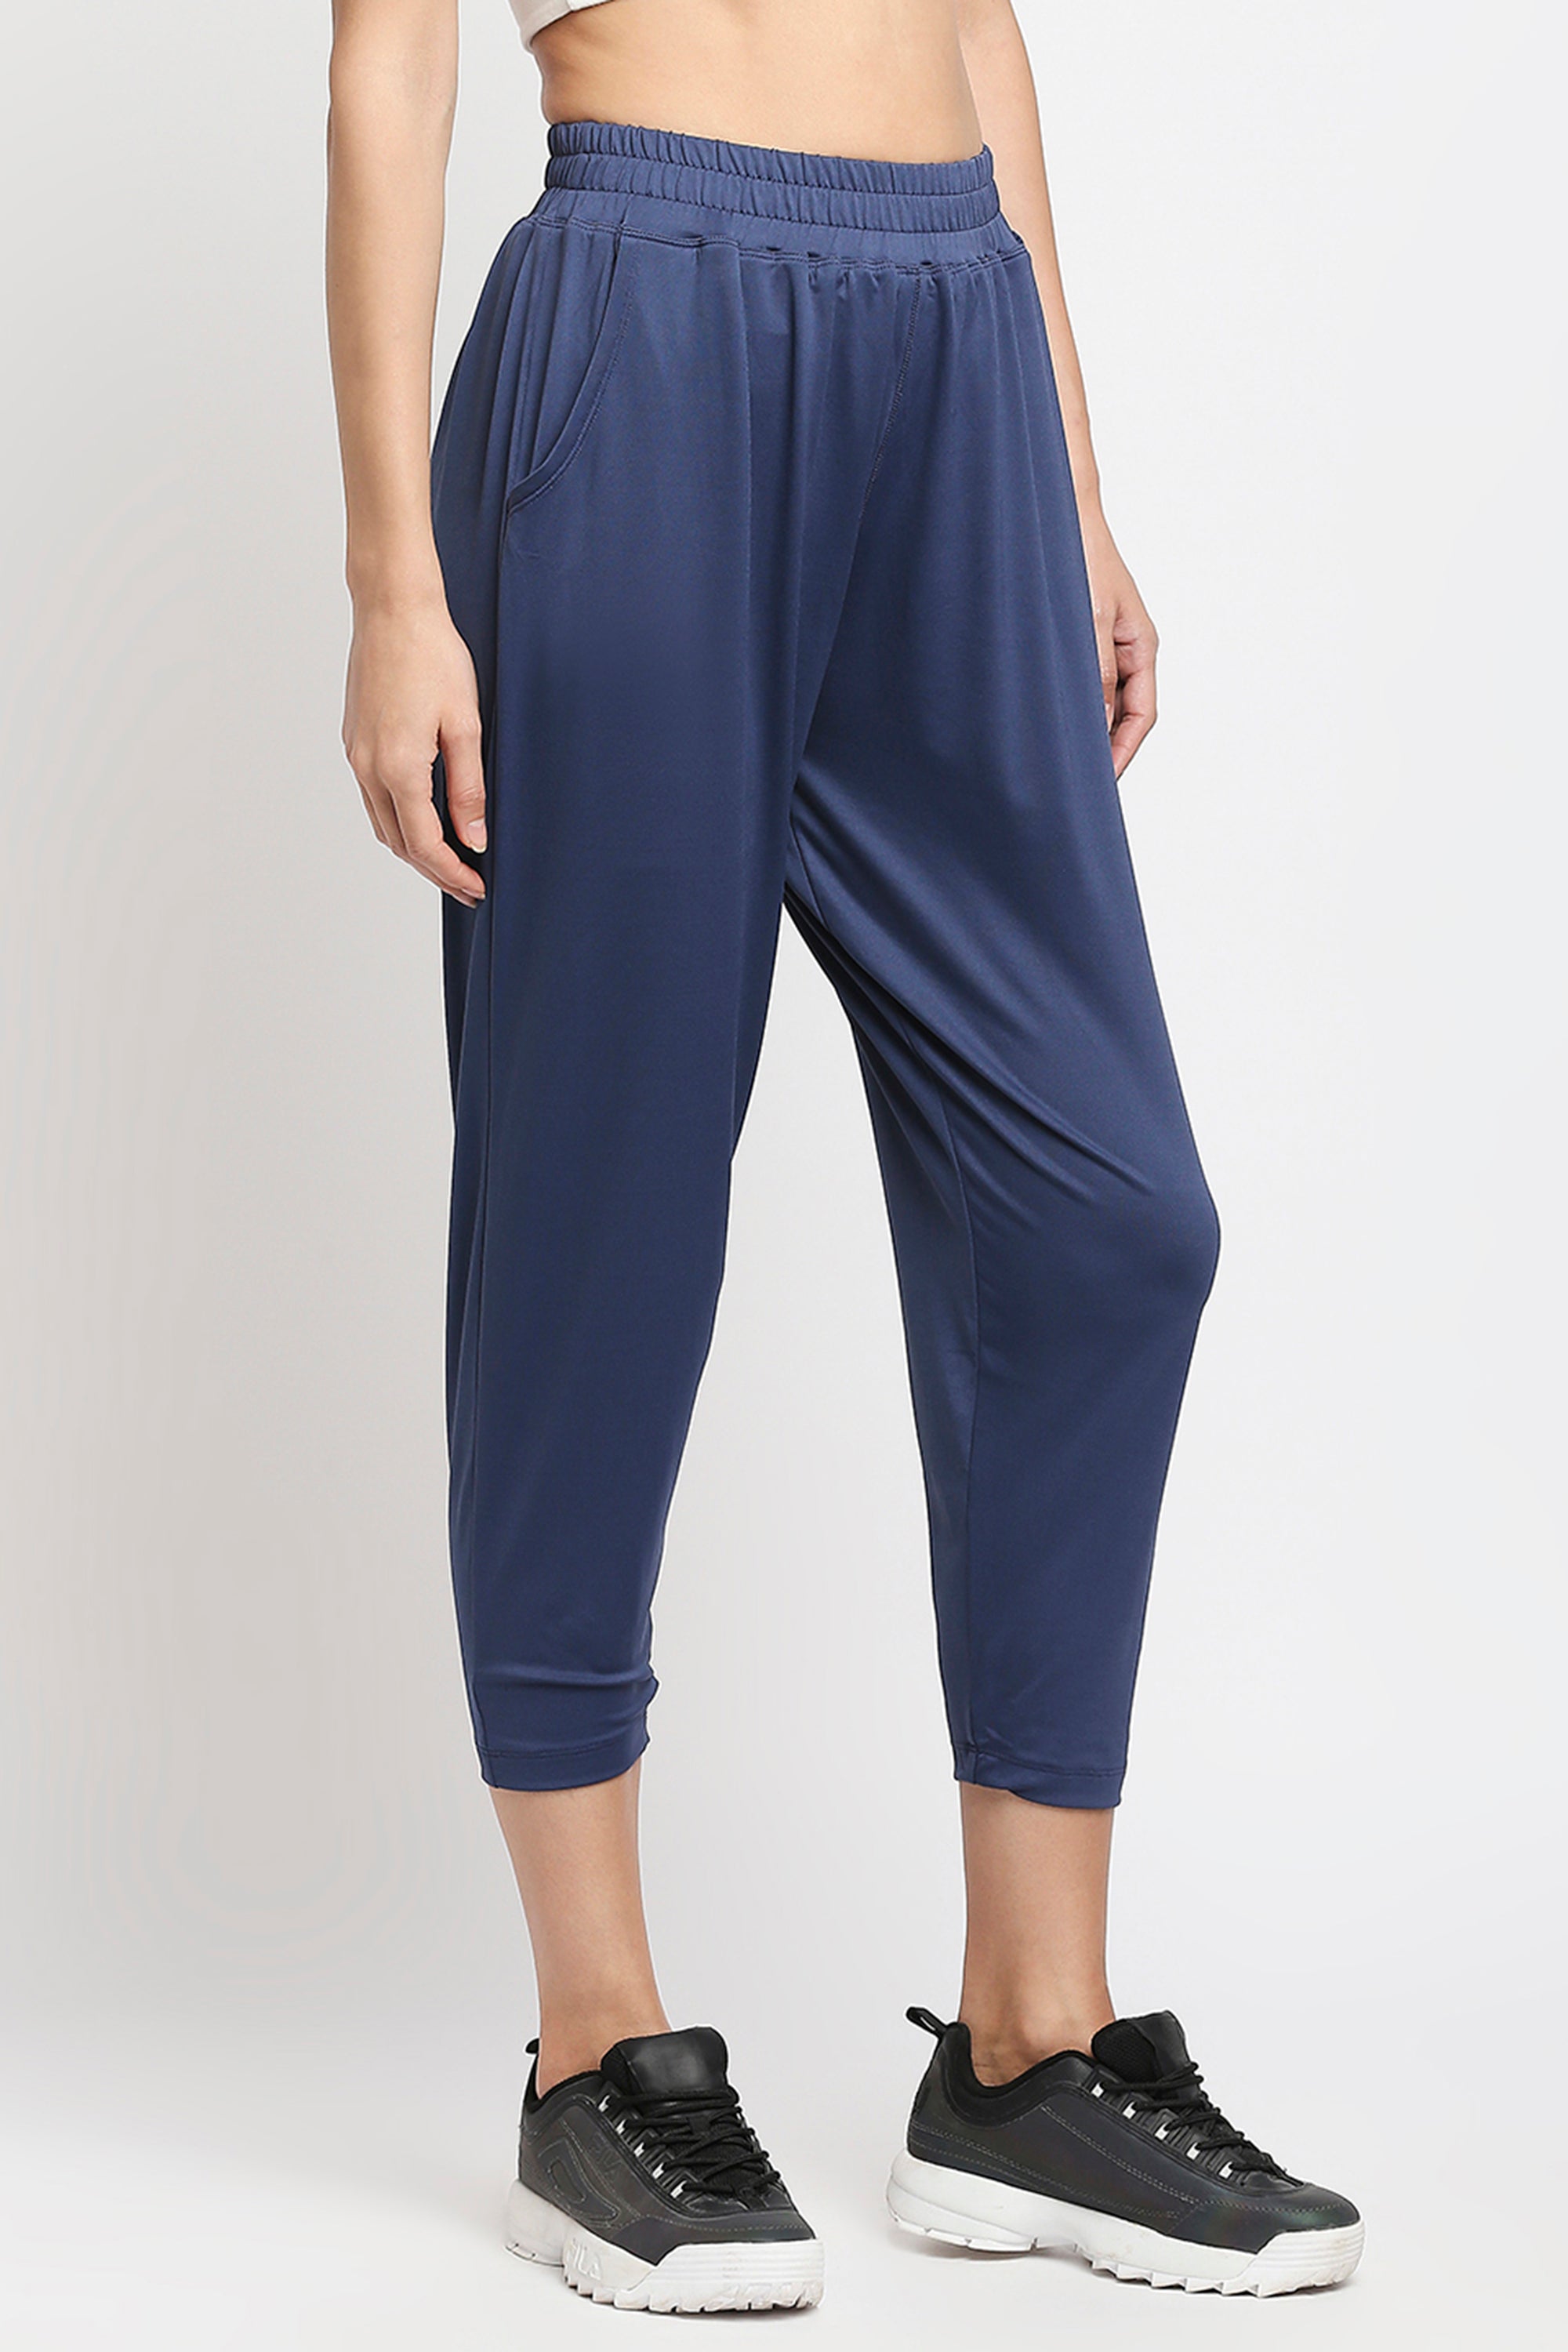 Blue Yoga Pants - AW21